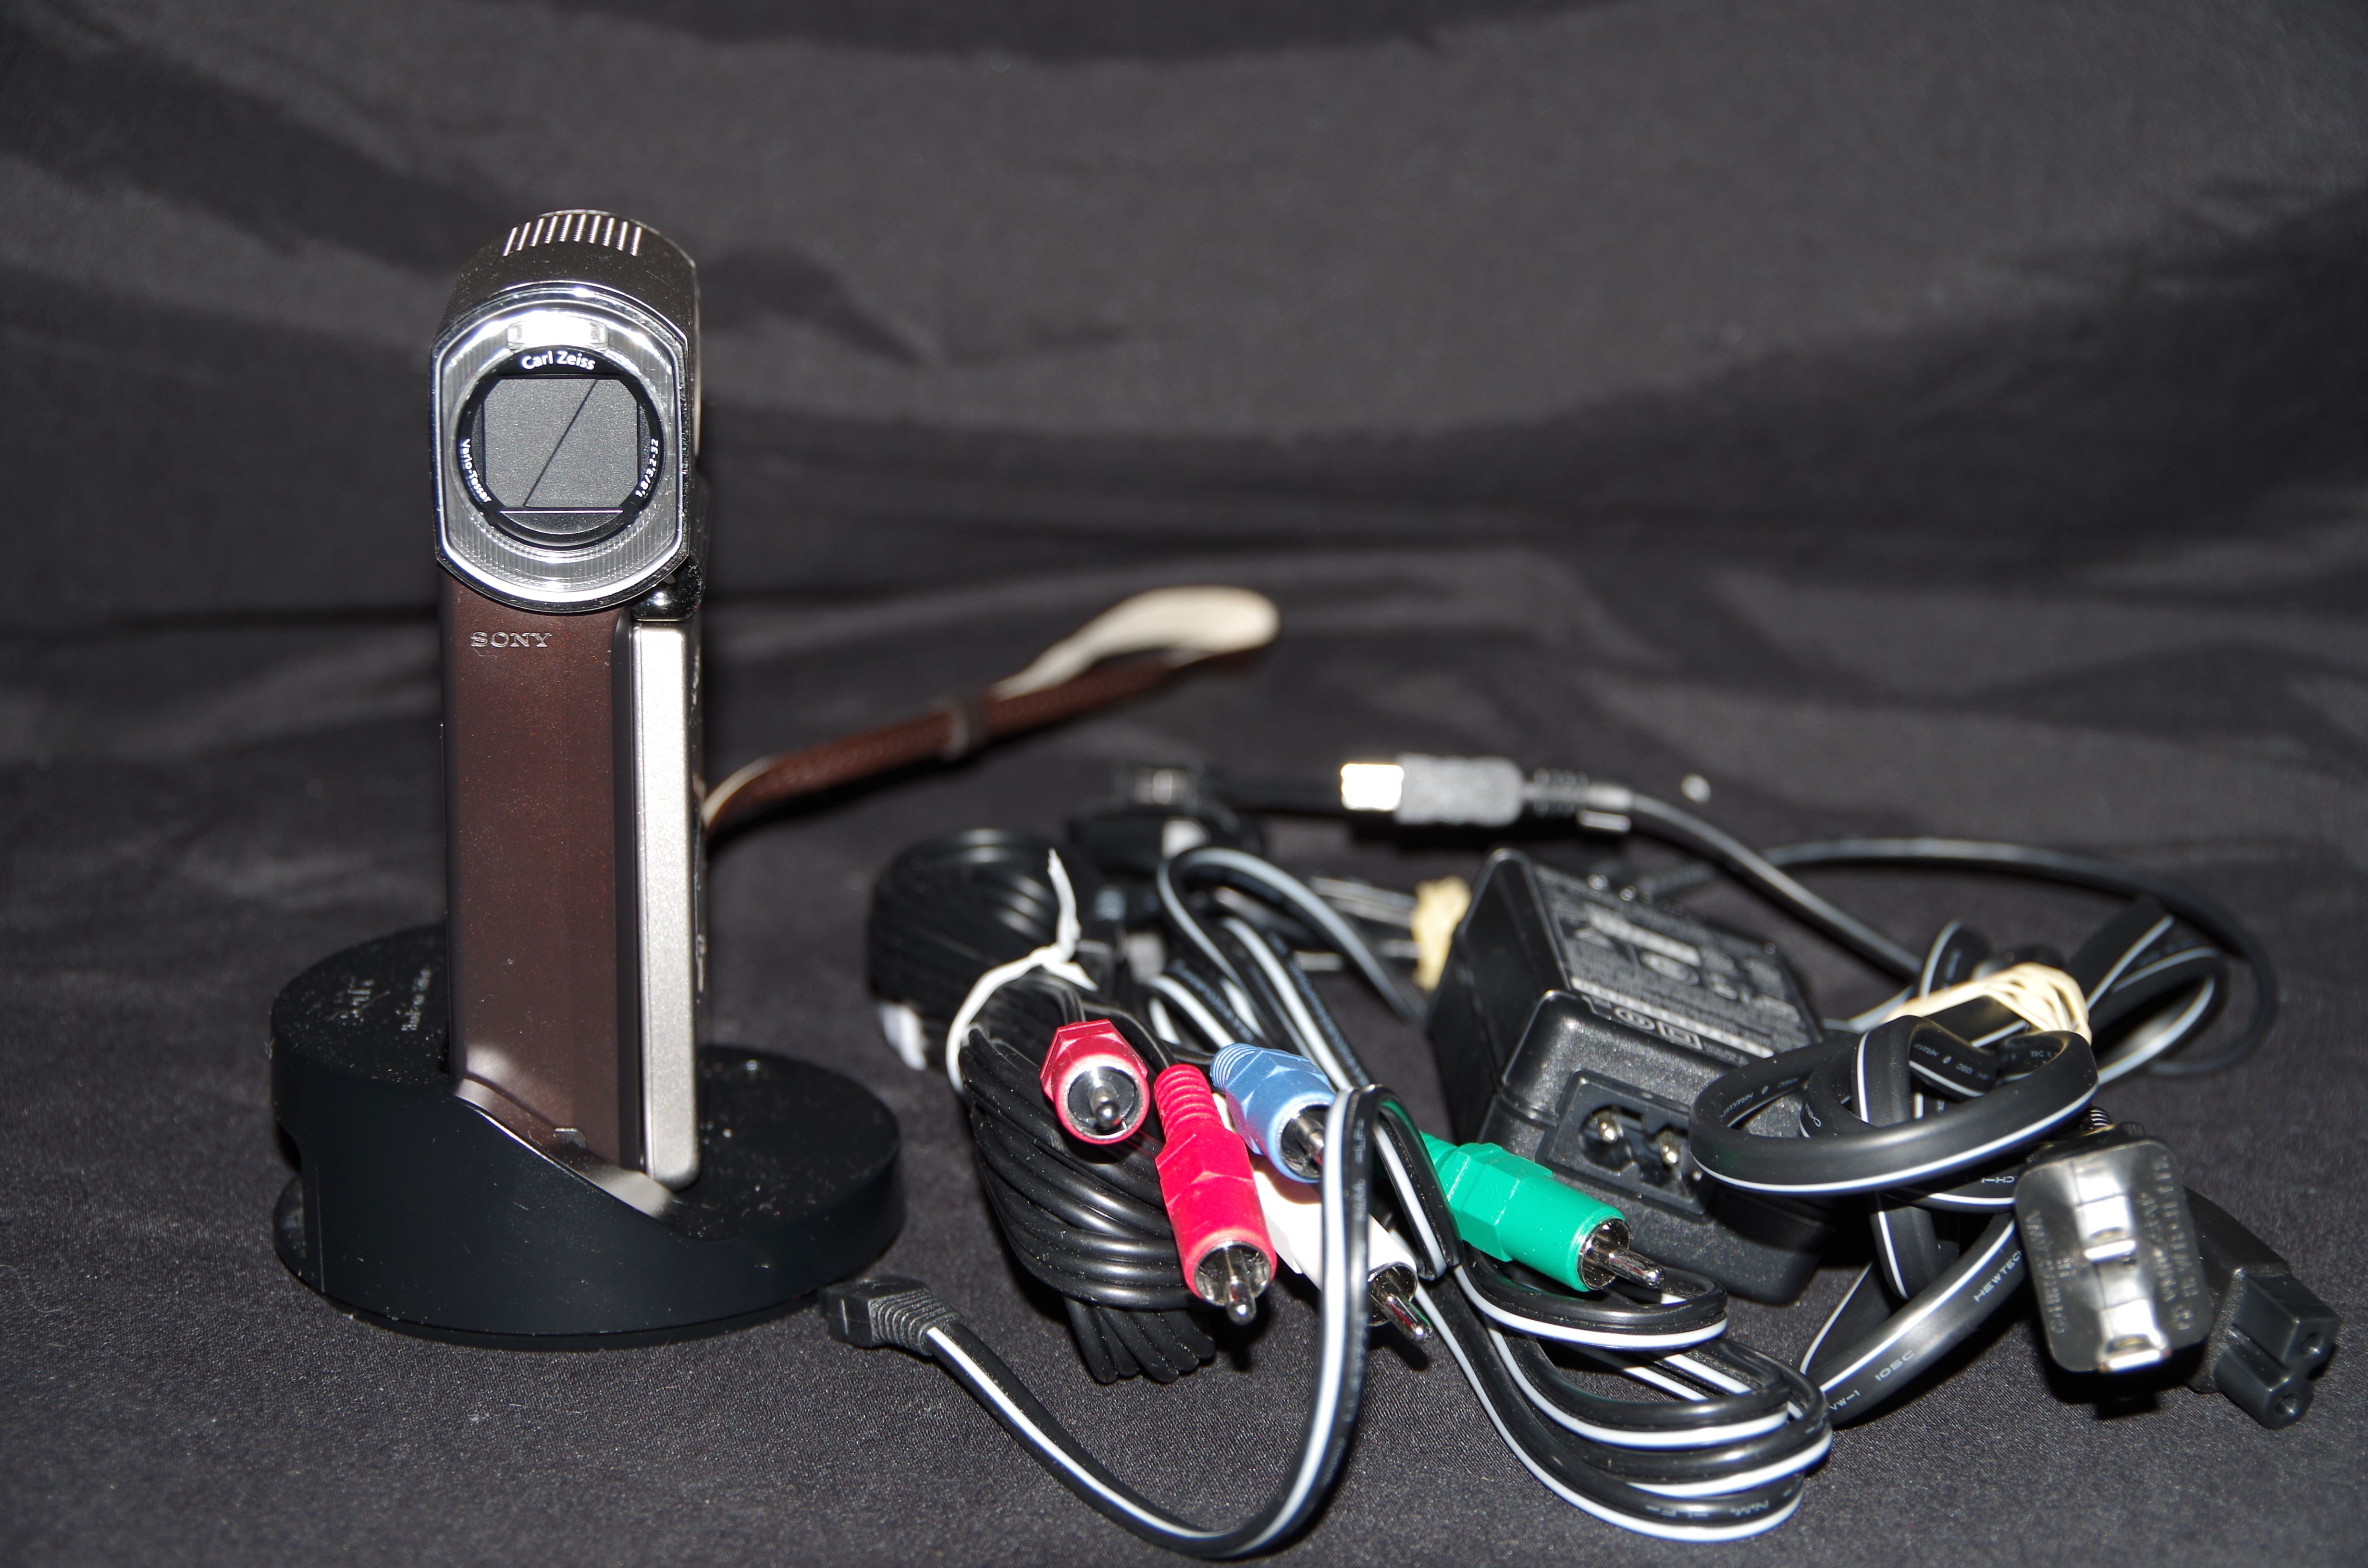 Sony Handycam HDR-TG1 Camcorder Camera